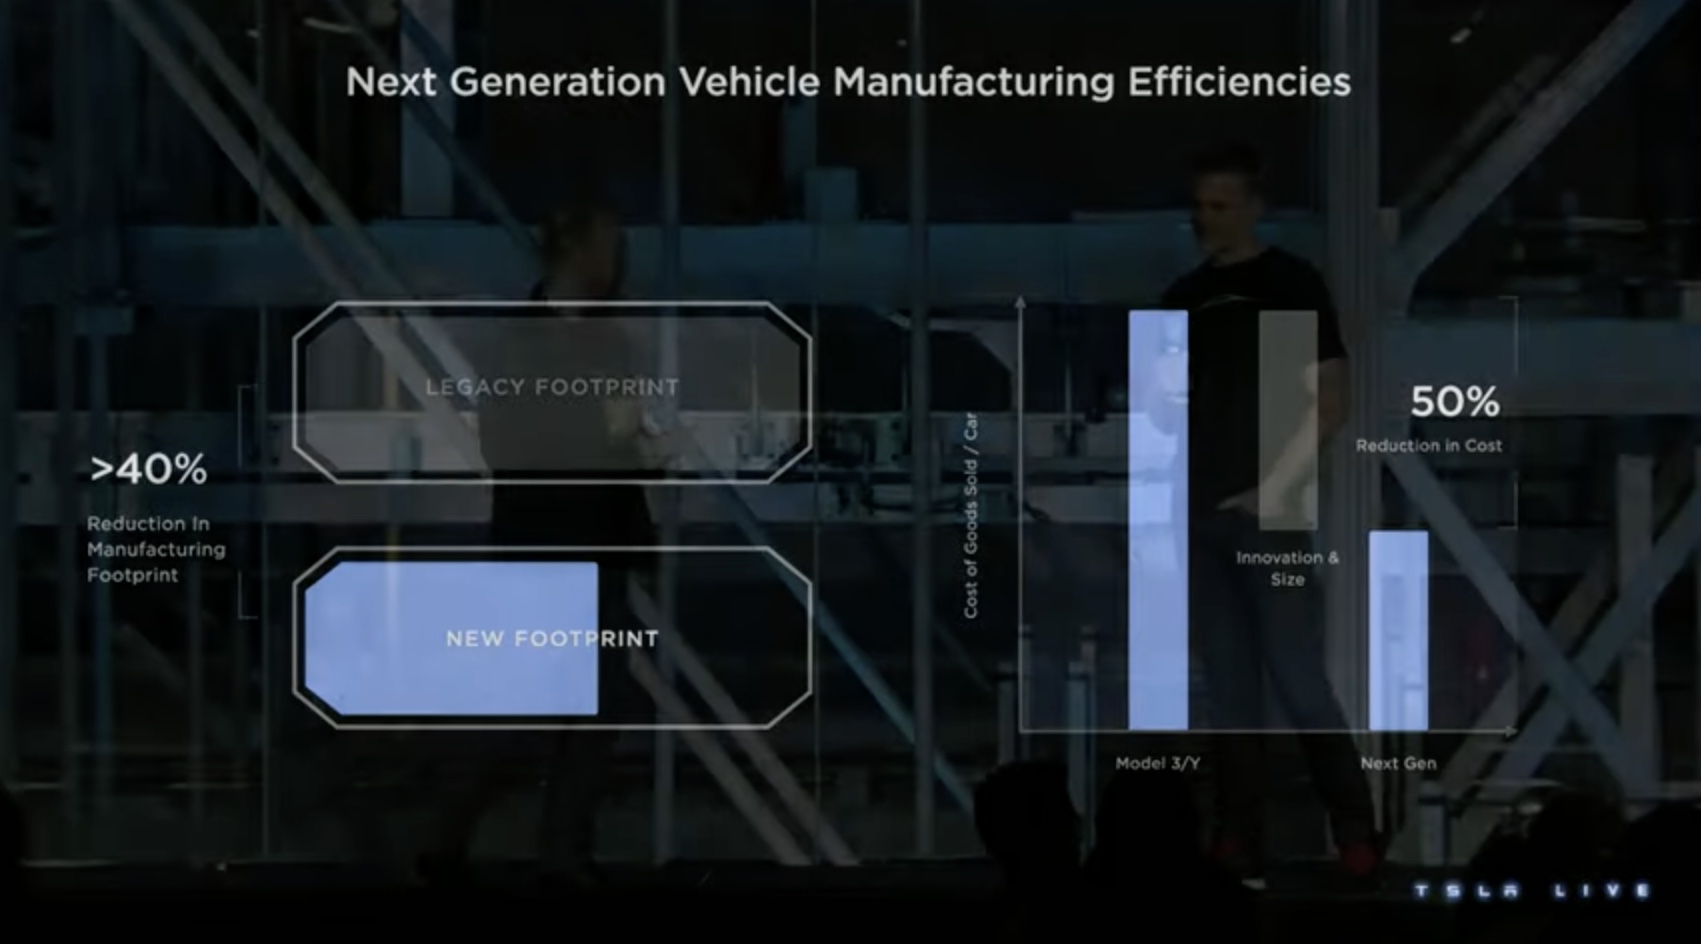 Tesla new generation vehicle investor day